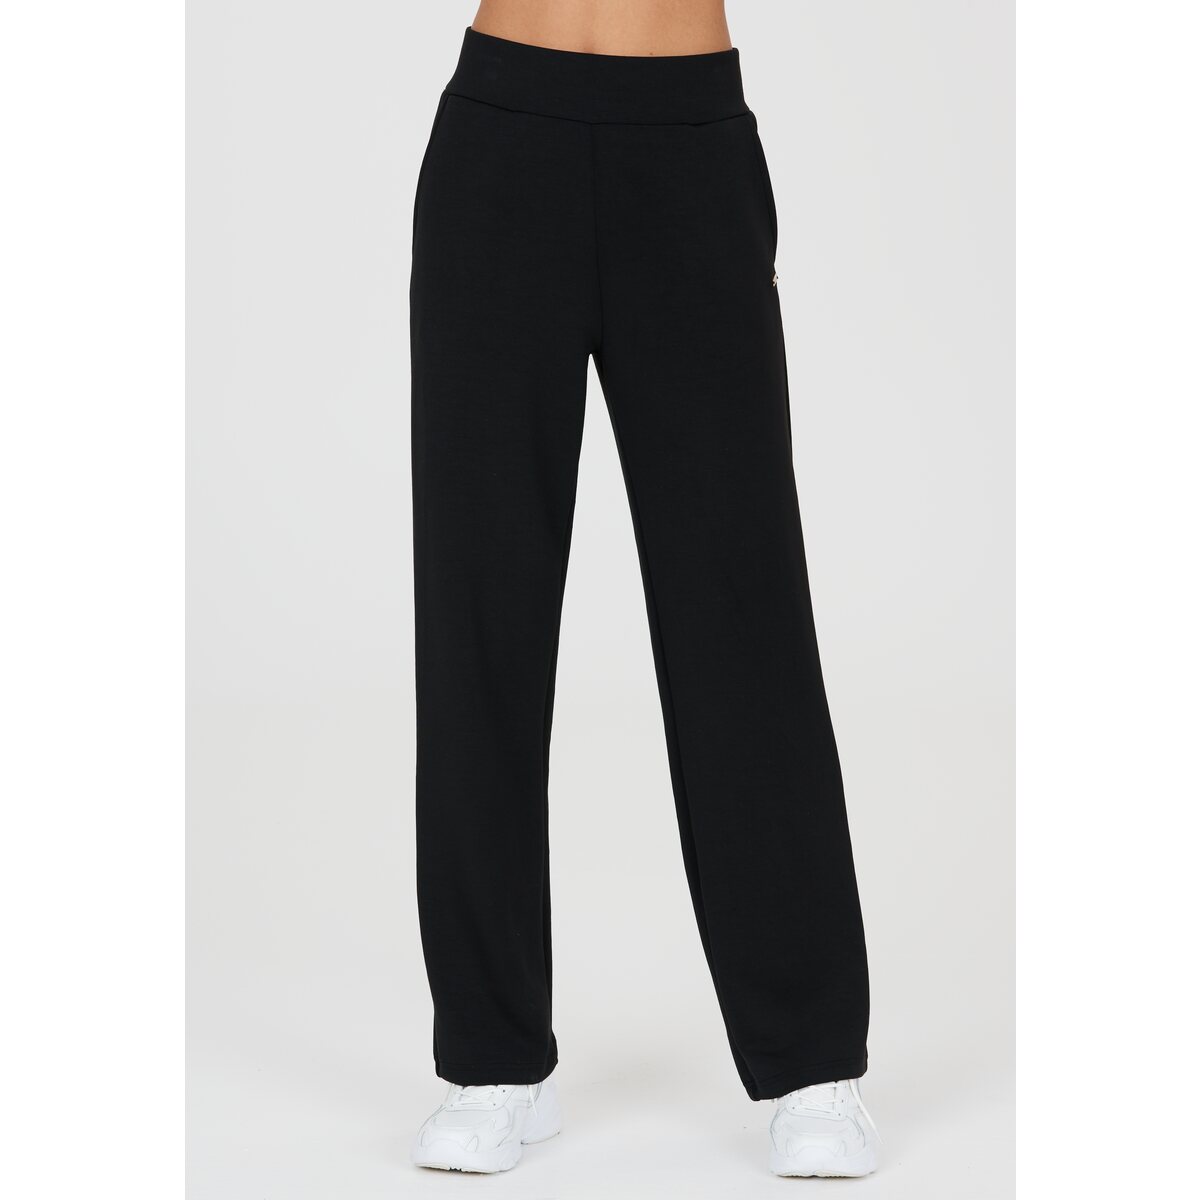 Athlecia Jacey Womenswear Regular Pants - Black 1 Shaws Department Stores